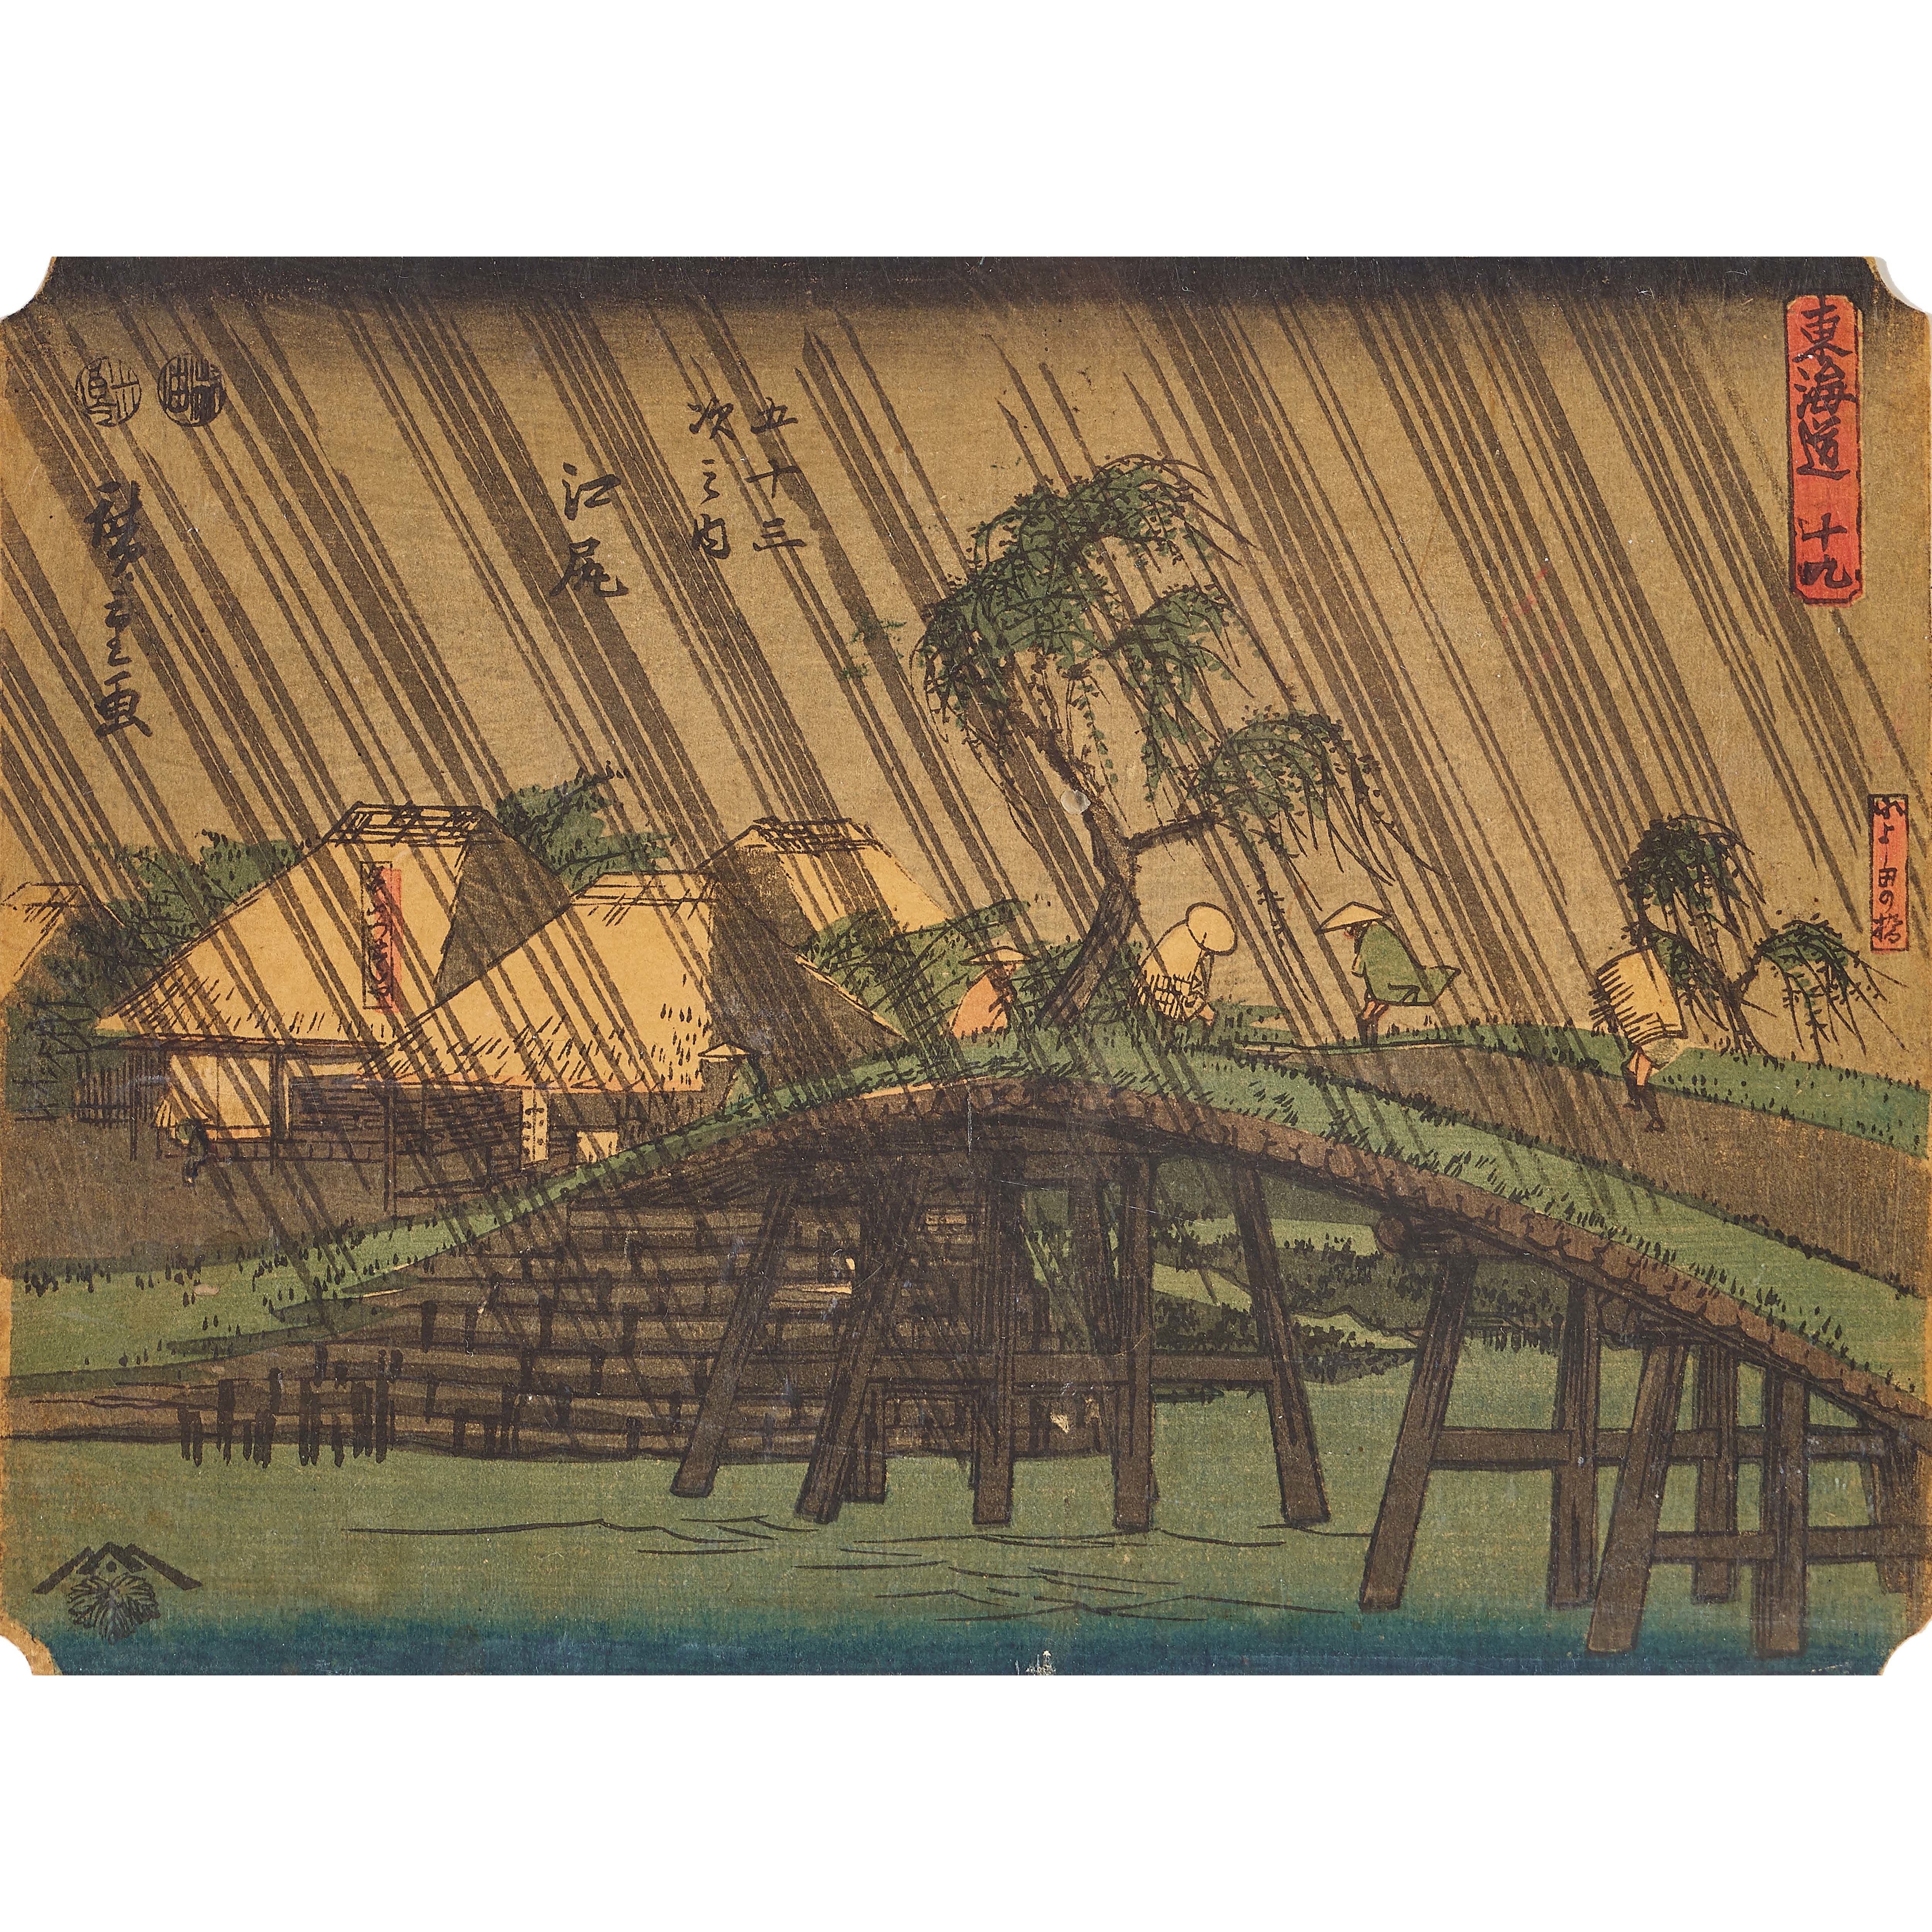 1. "Yoshiwara". 2. "Ejiri" - Utagawa Hiroshige